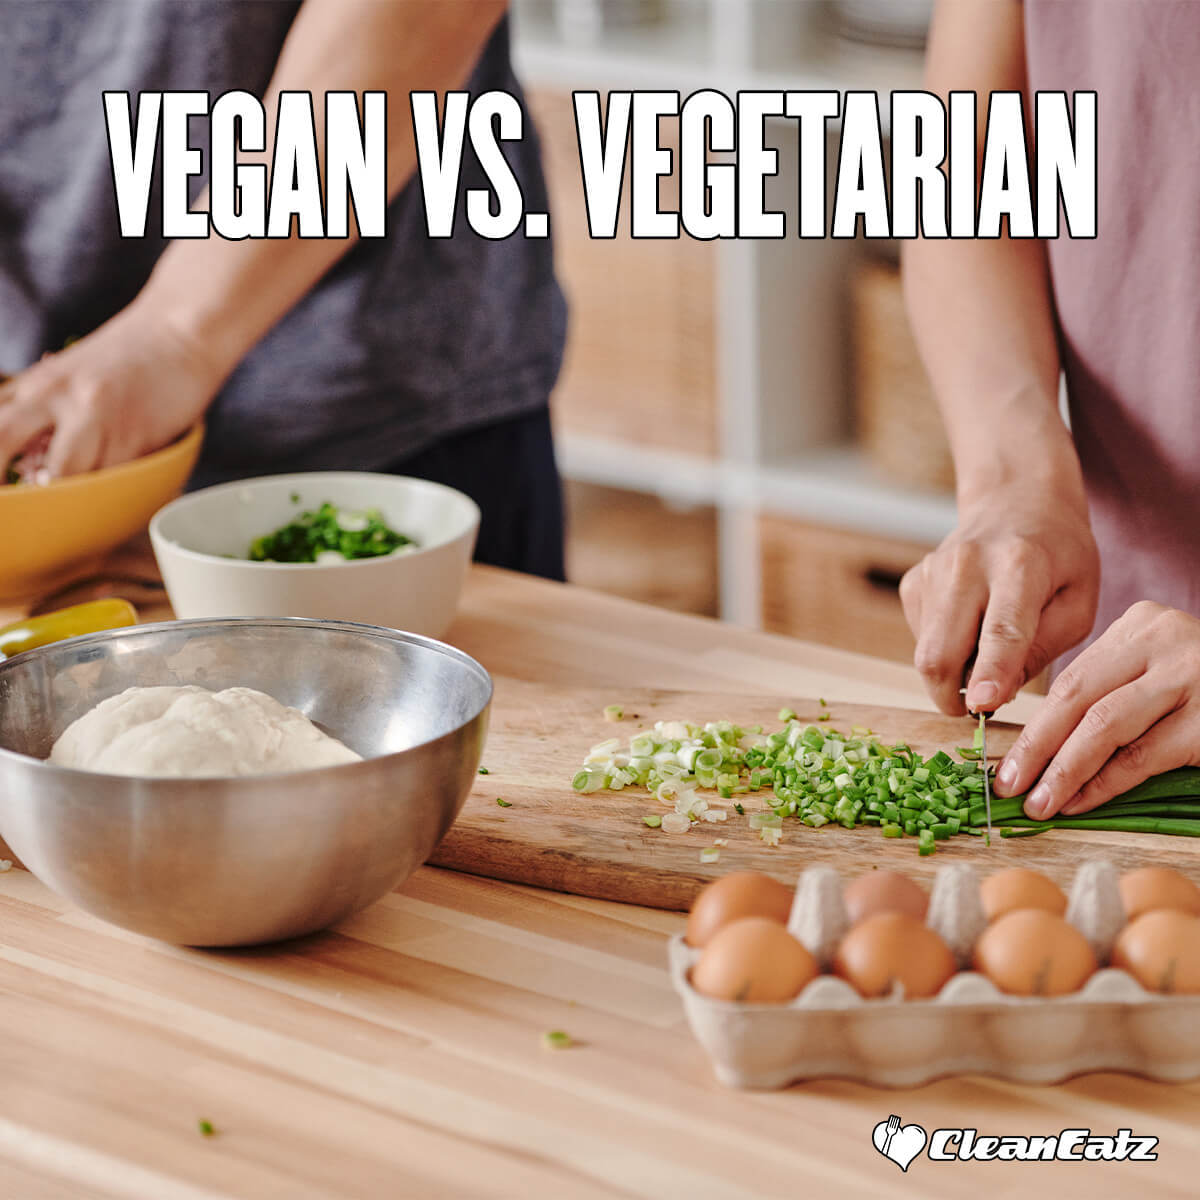 Vegan Vs Vegetarian Key Differences And Benefits 1098